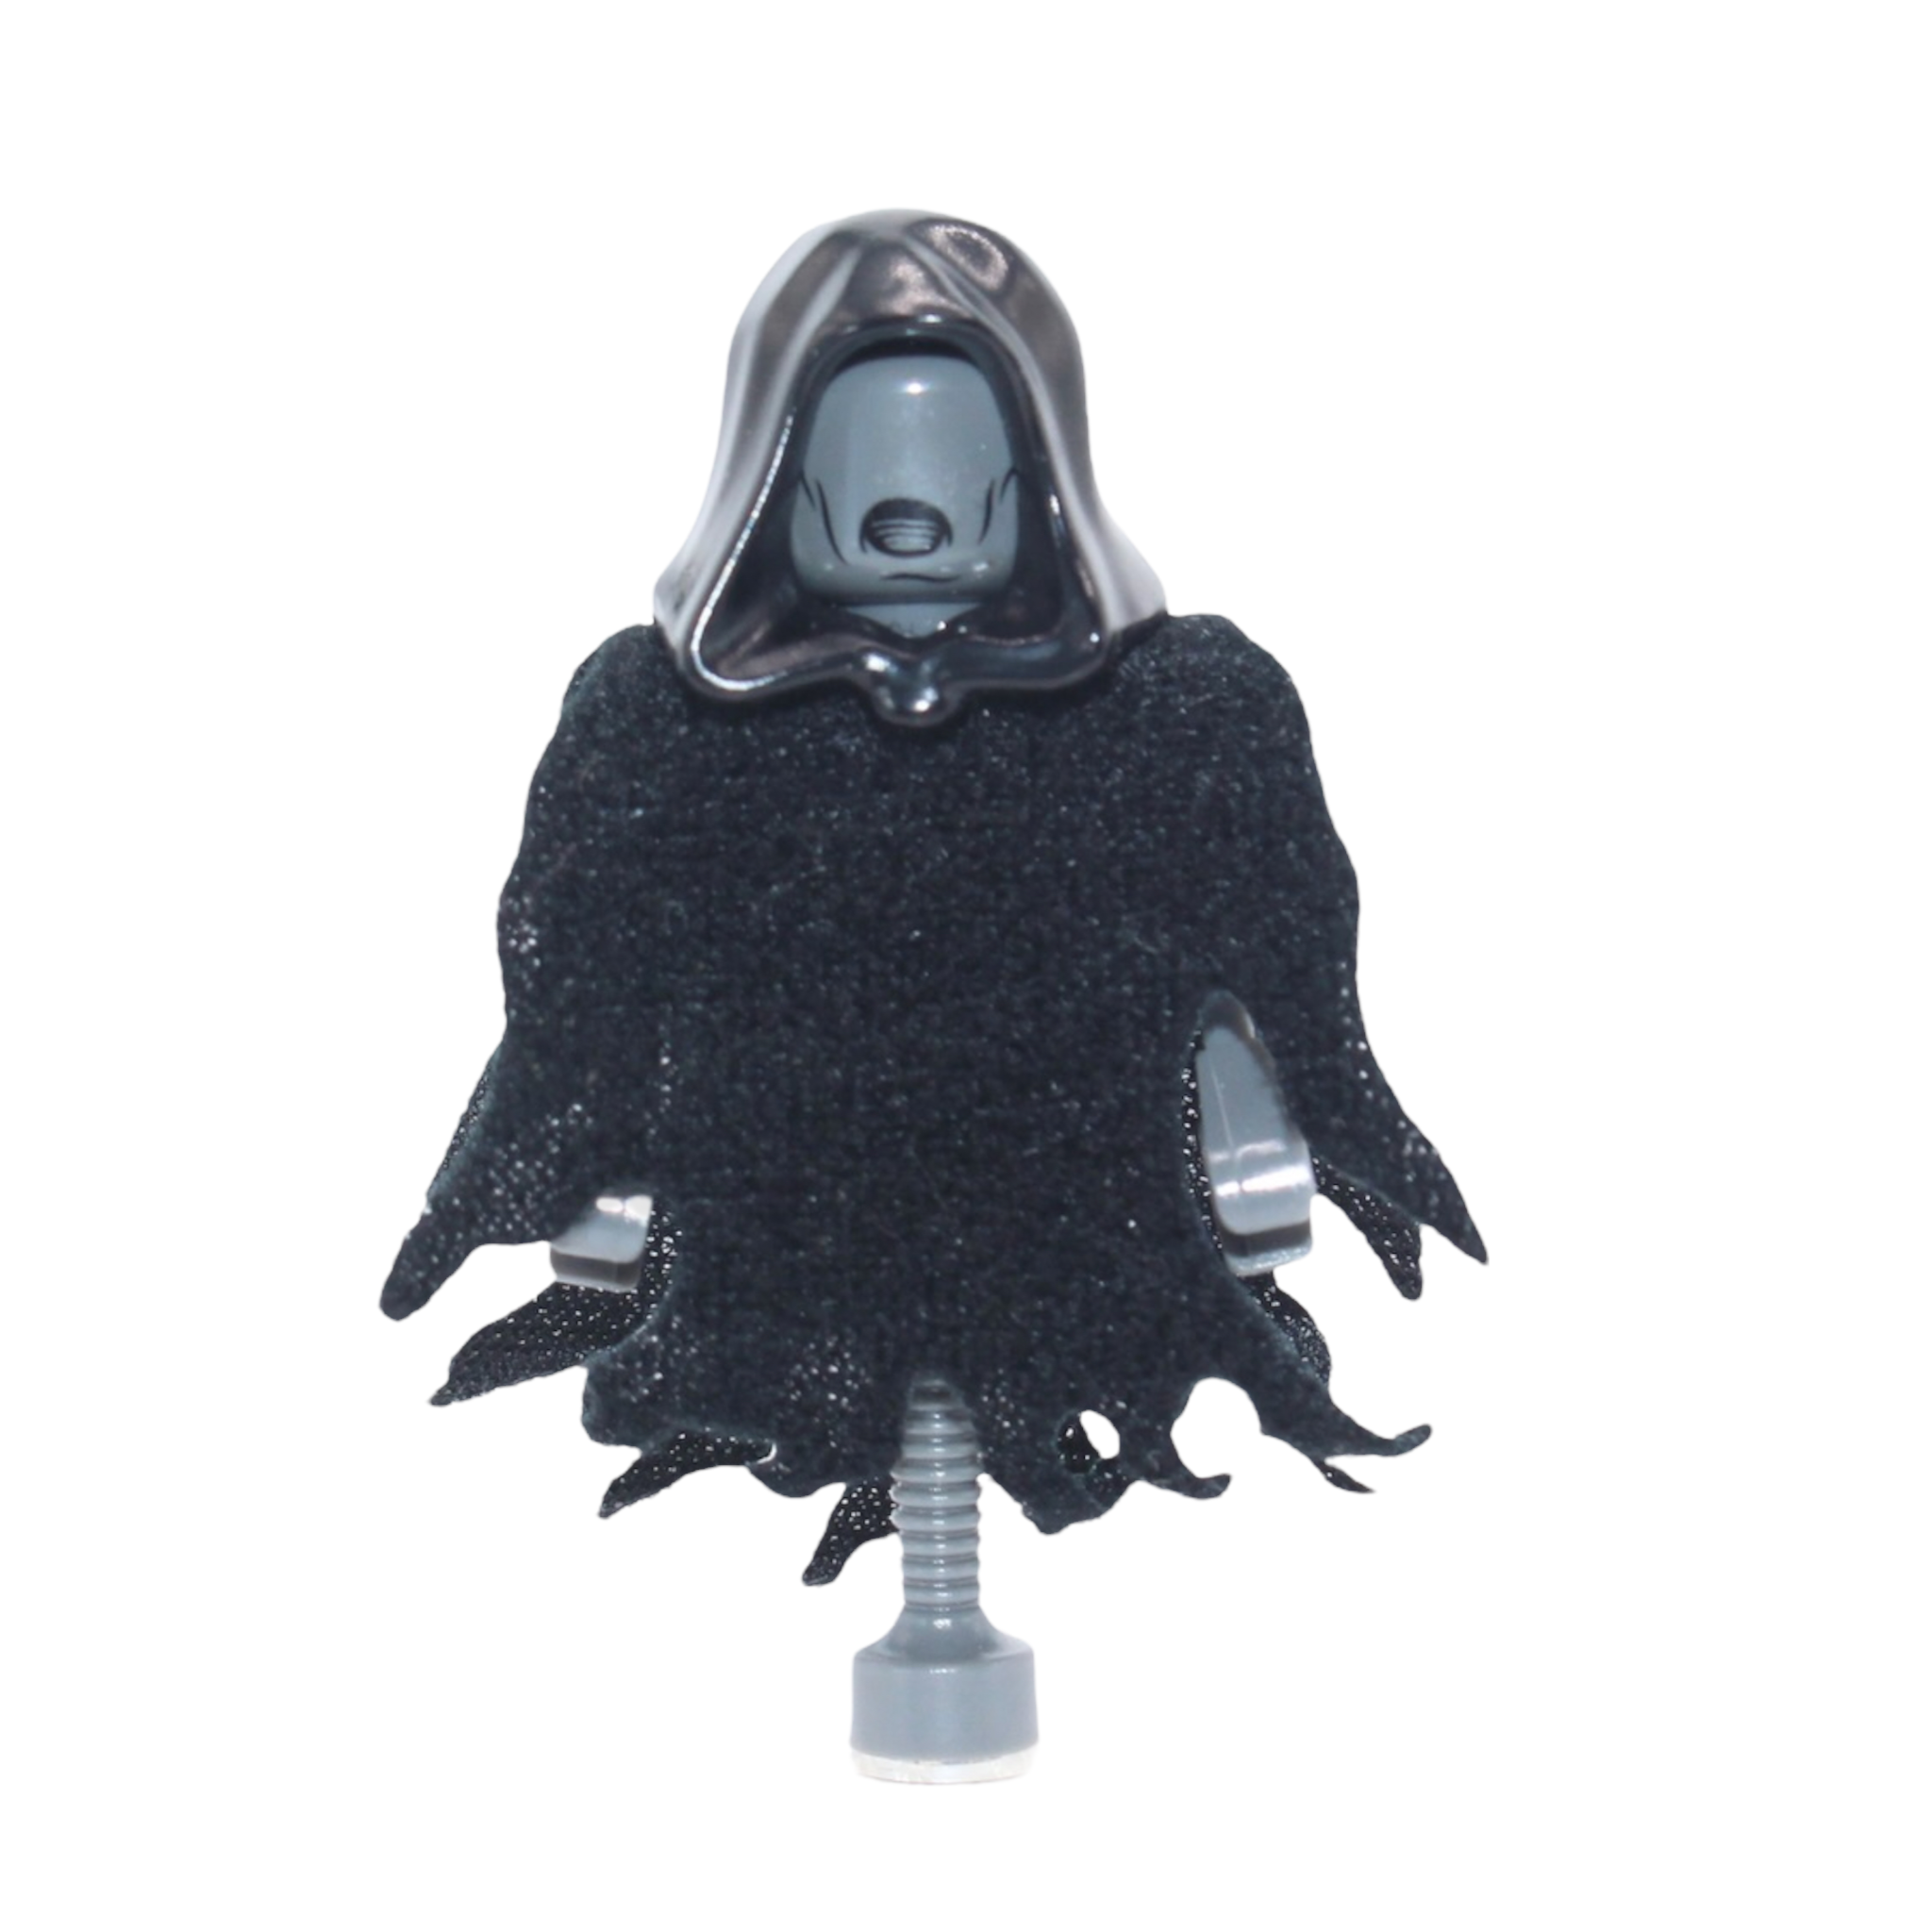 Dementor (black hood and cloak, gray body, 2010)